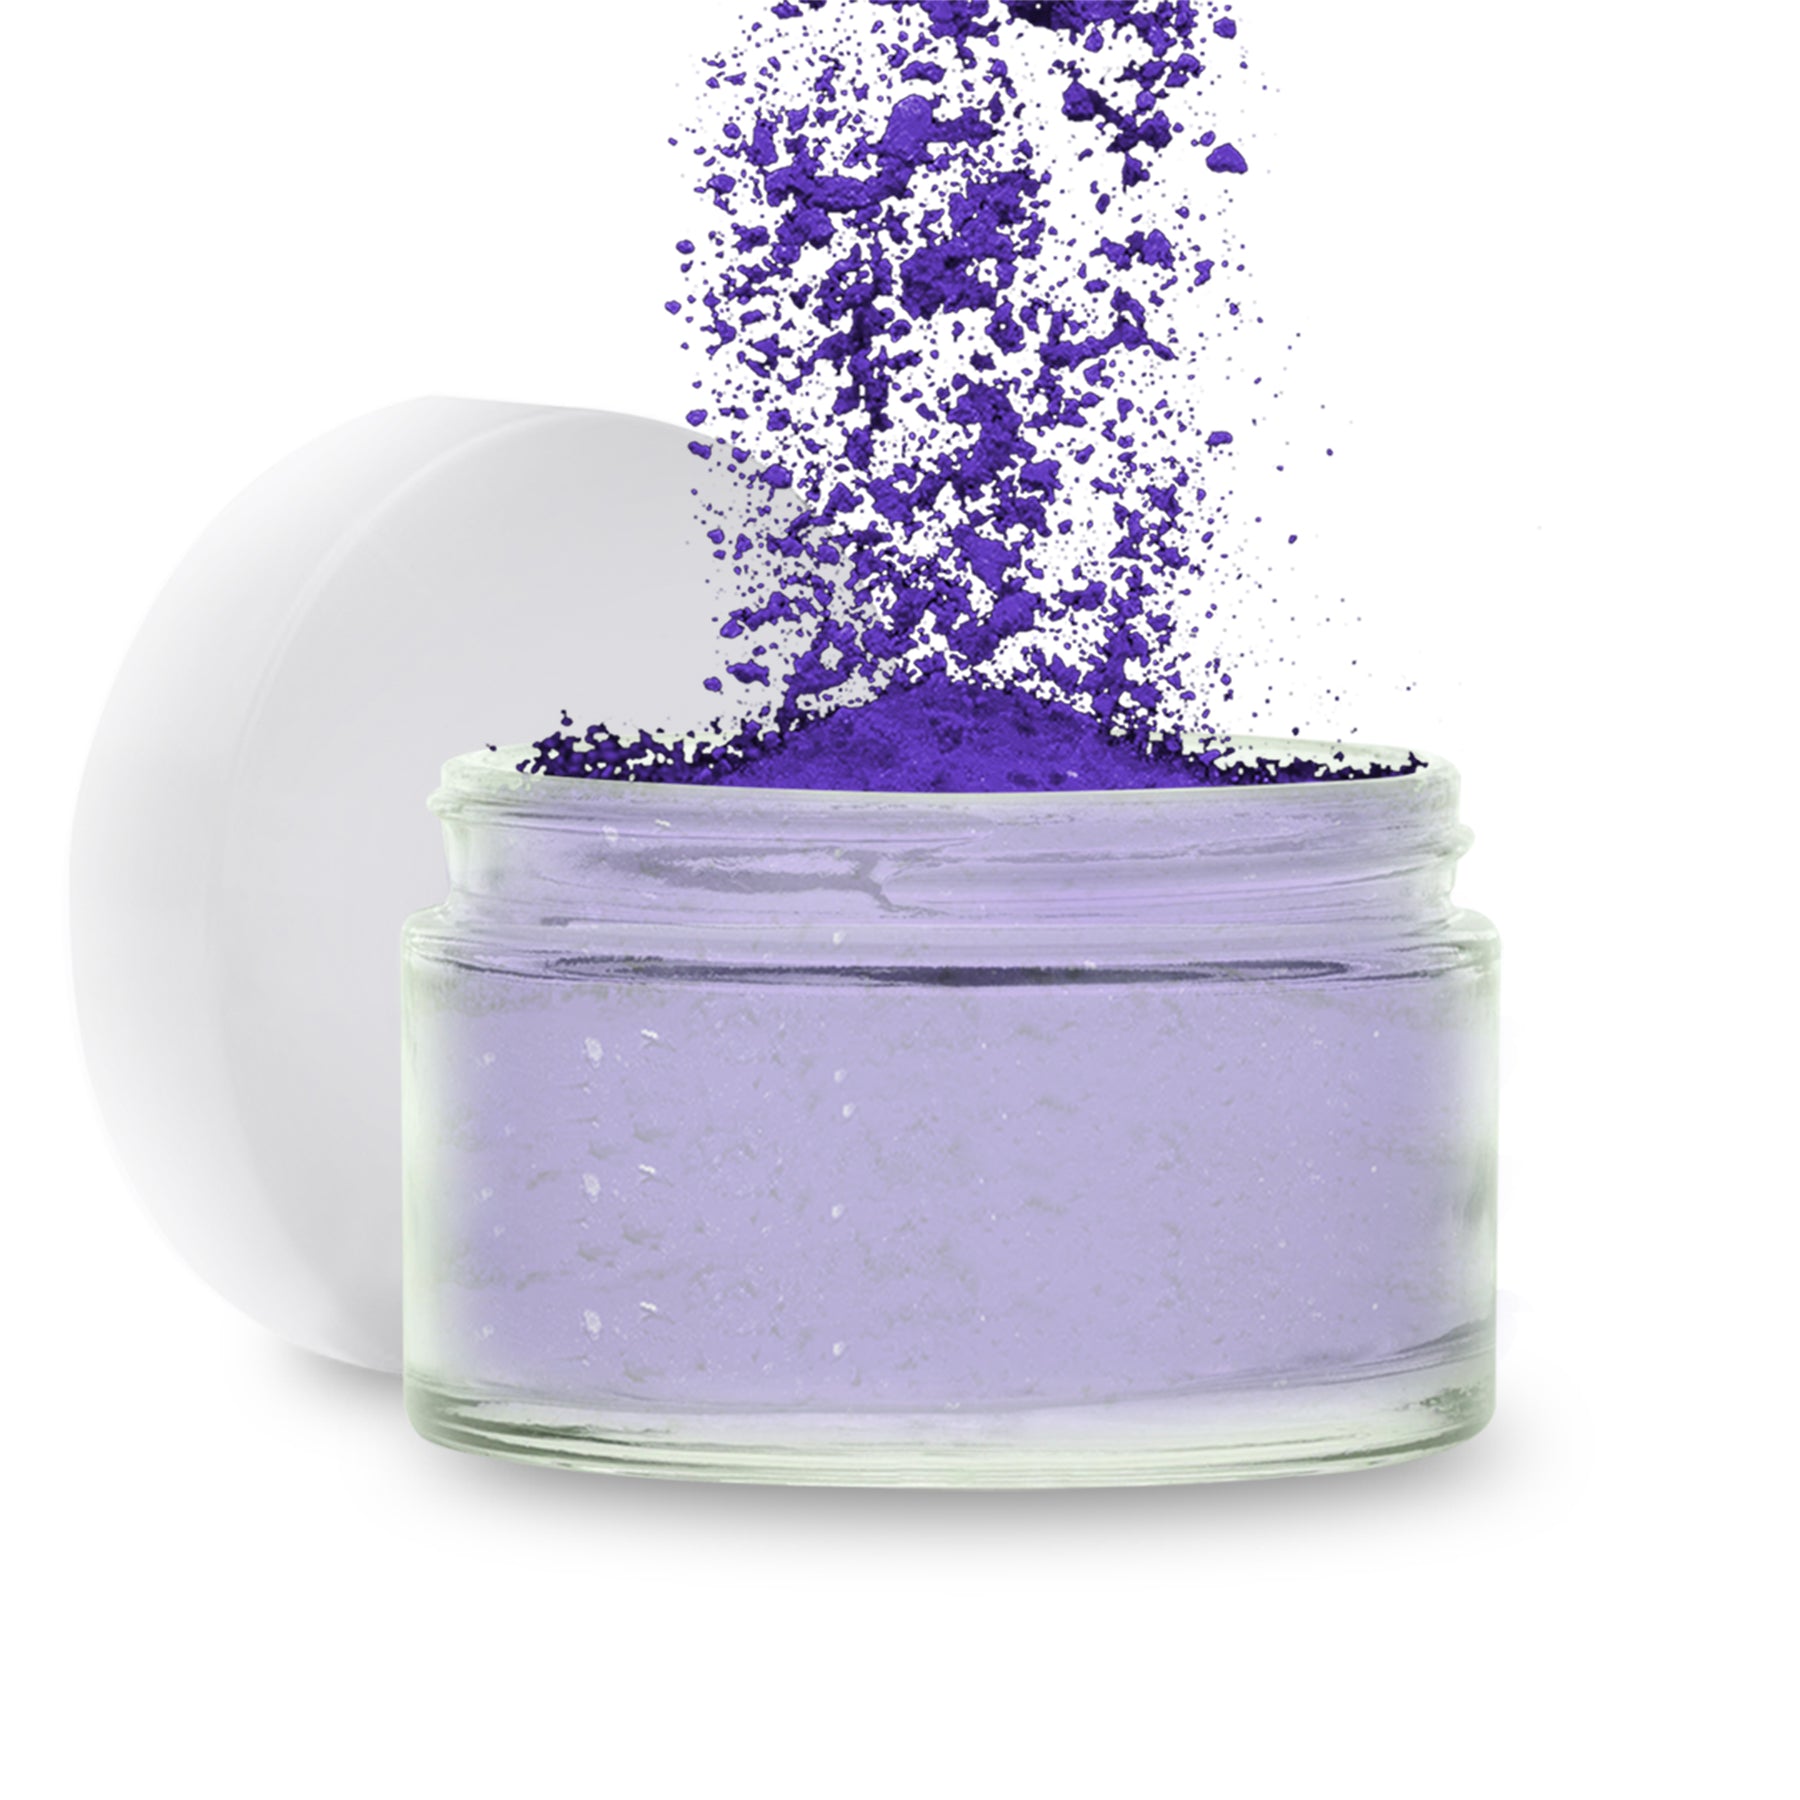 Pearl Pigment Powder, Mica Powder, Magic Violet